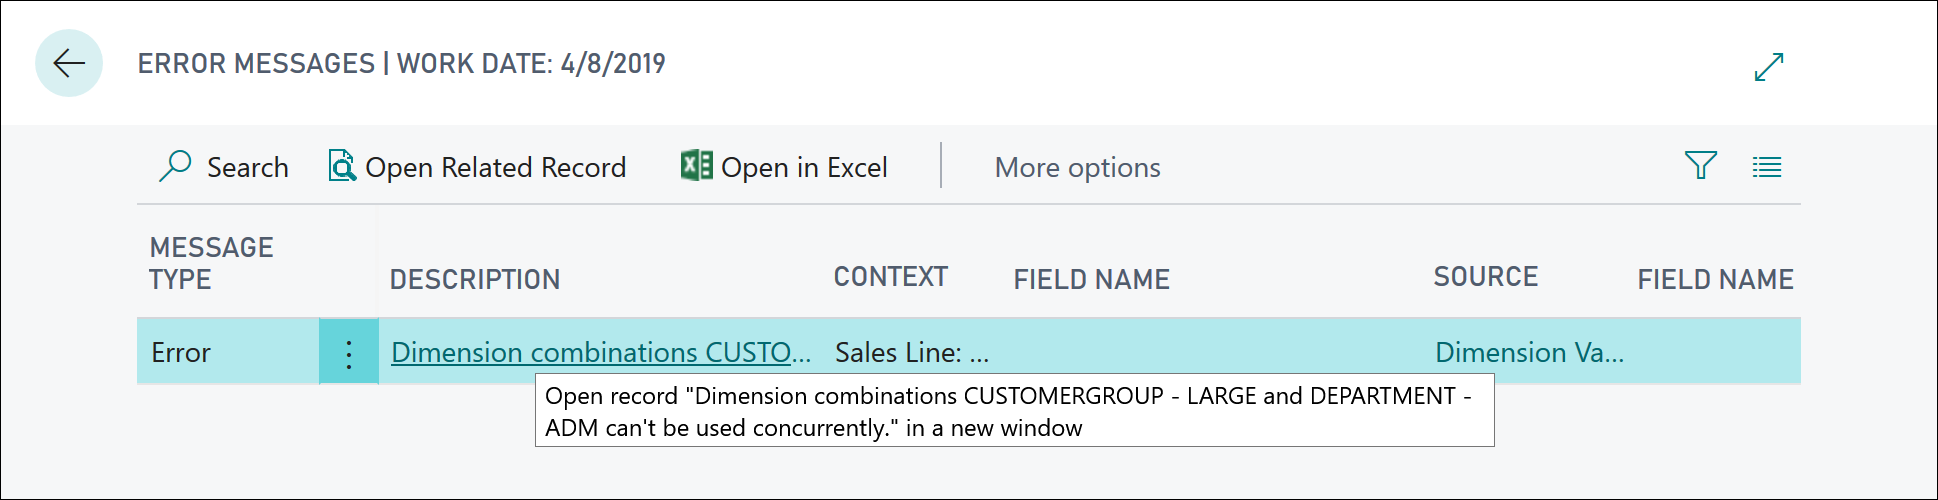 Screenshot of the Dimension value combination error message.